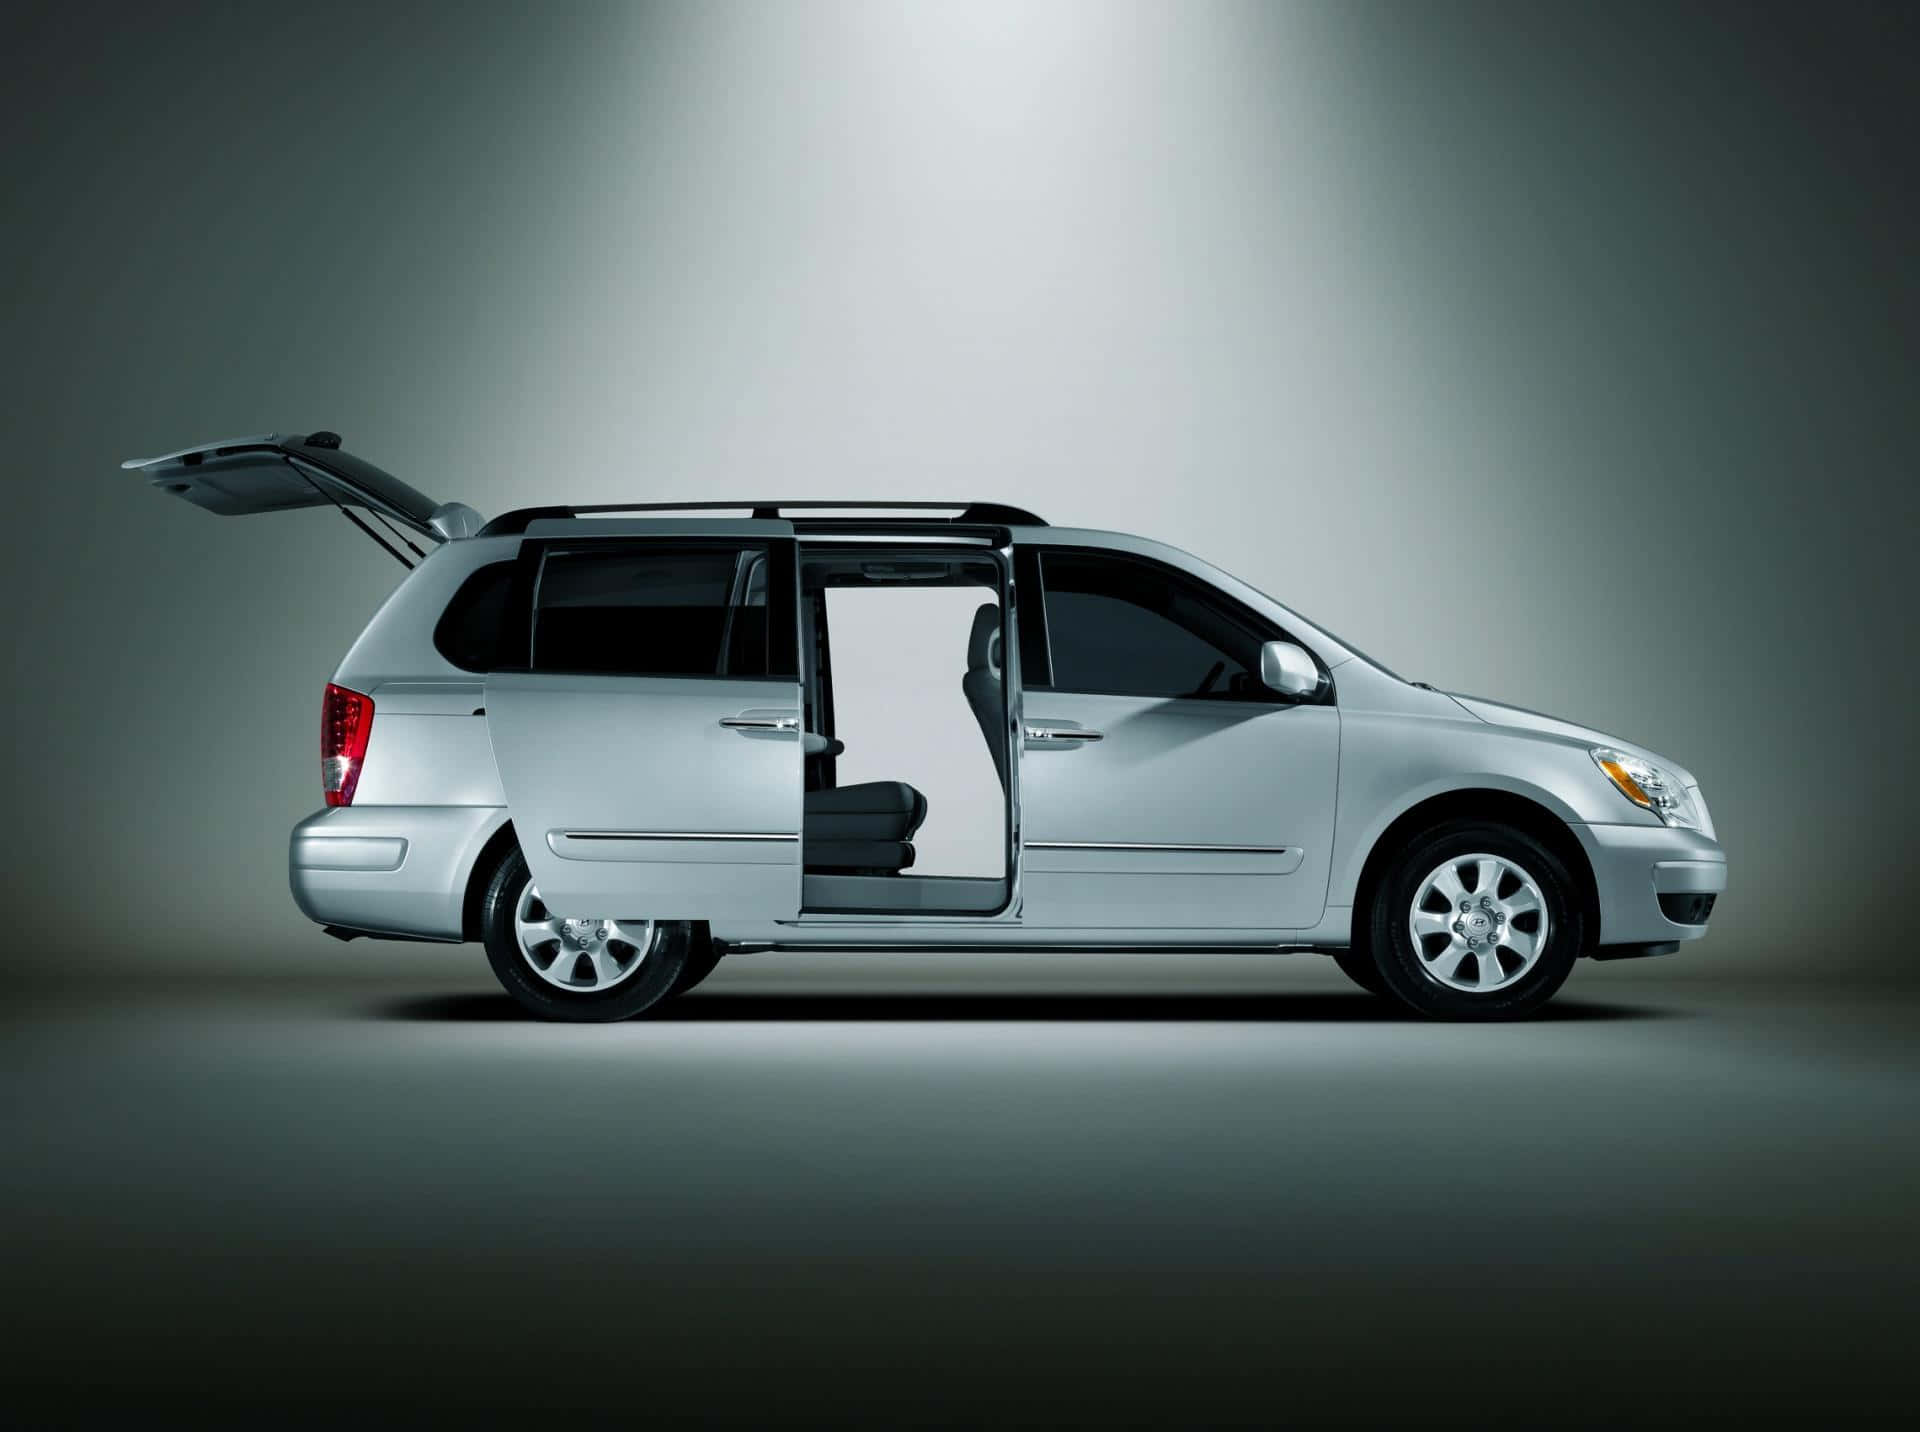 Stylish Hyundai Entourage Minivan Wallpaper